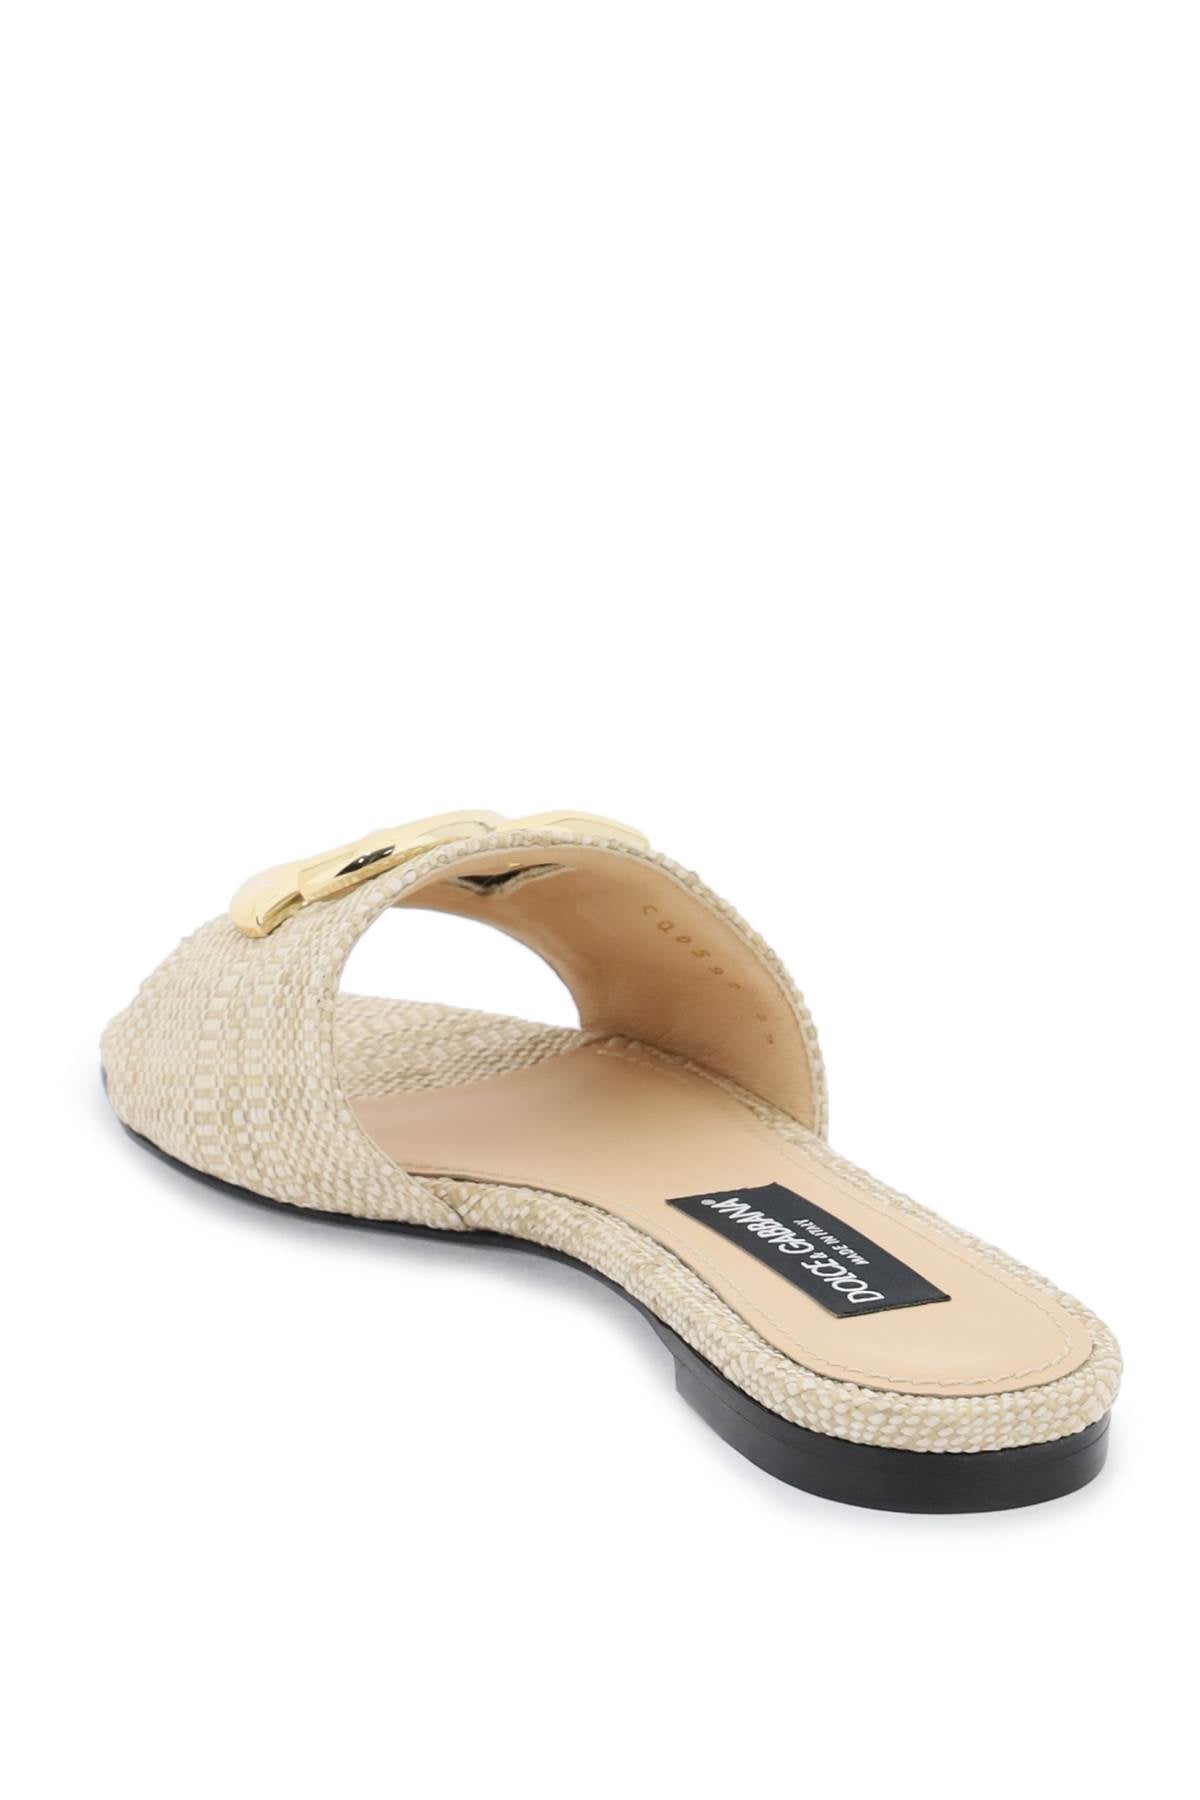 DOLCE & GABBANA Luxurious DG Logo Slide Sandals in Sabbia for Women - SS24 Collection